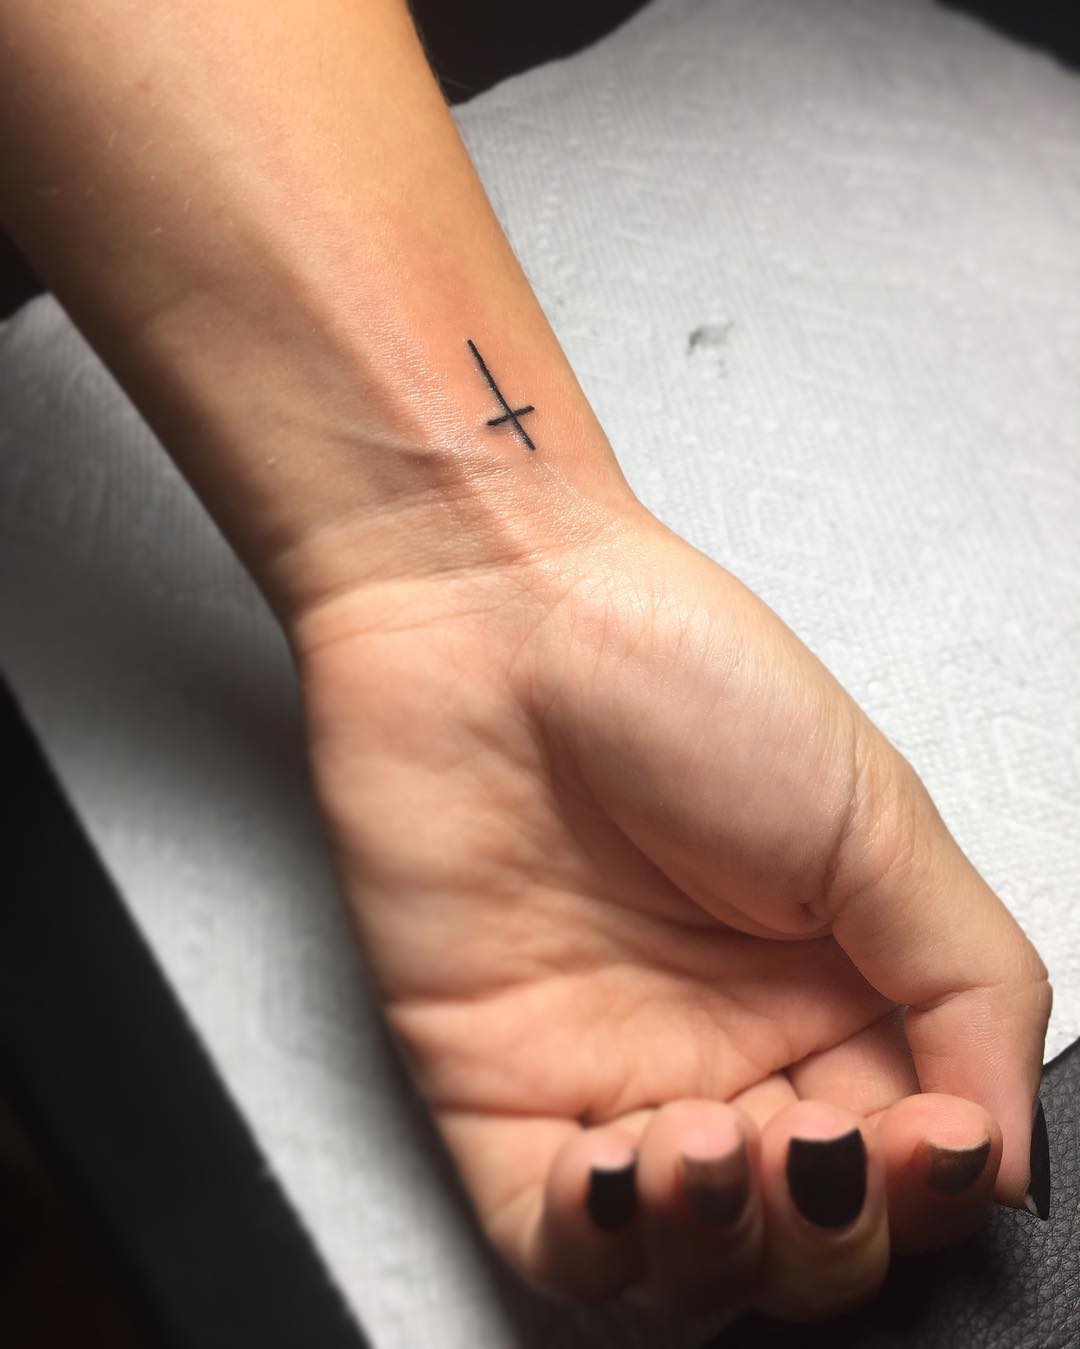 Small Cross Tattoos On The Wrist Free